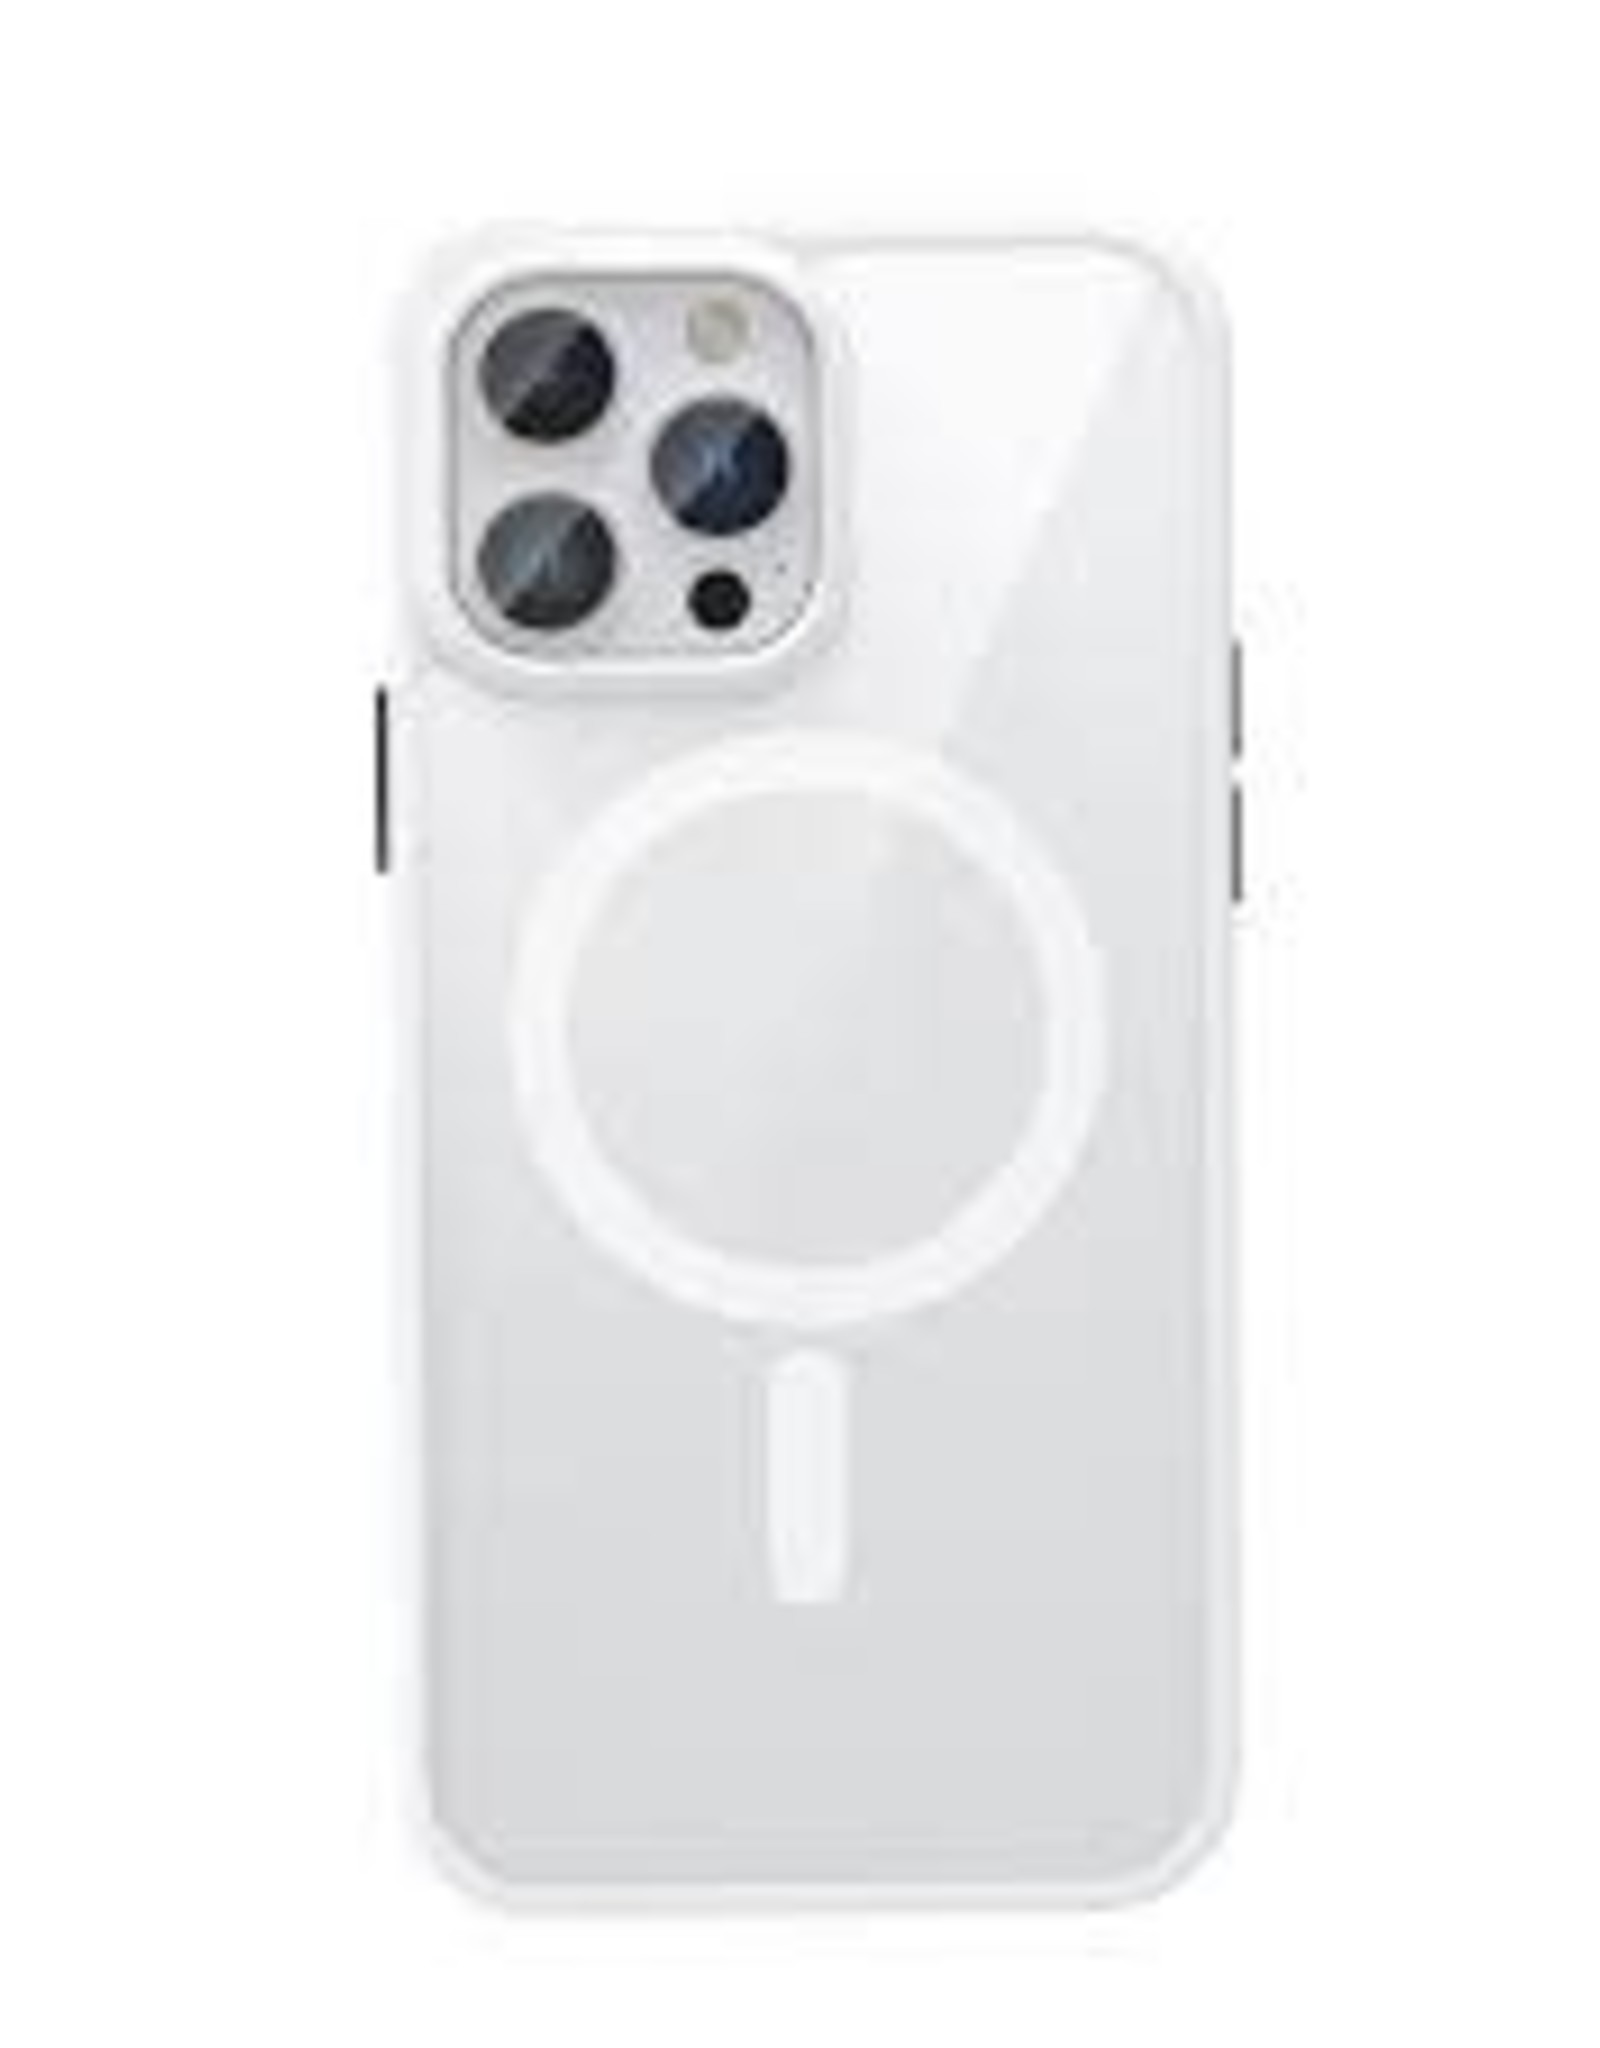 Crystal Pro Drop Resistance Phone Case - Magnet